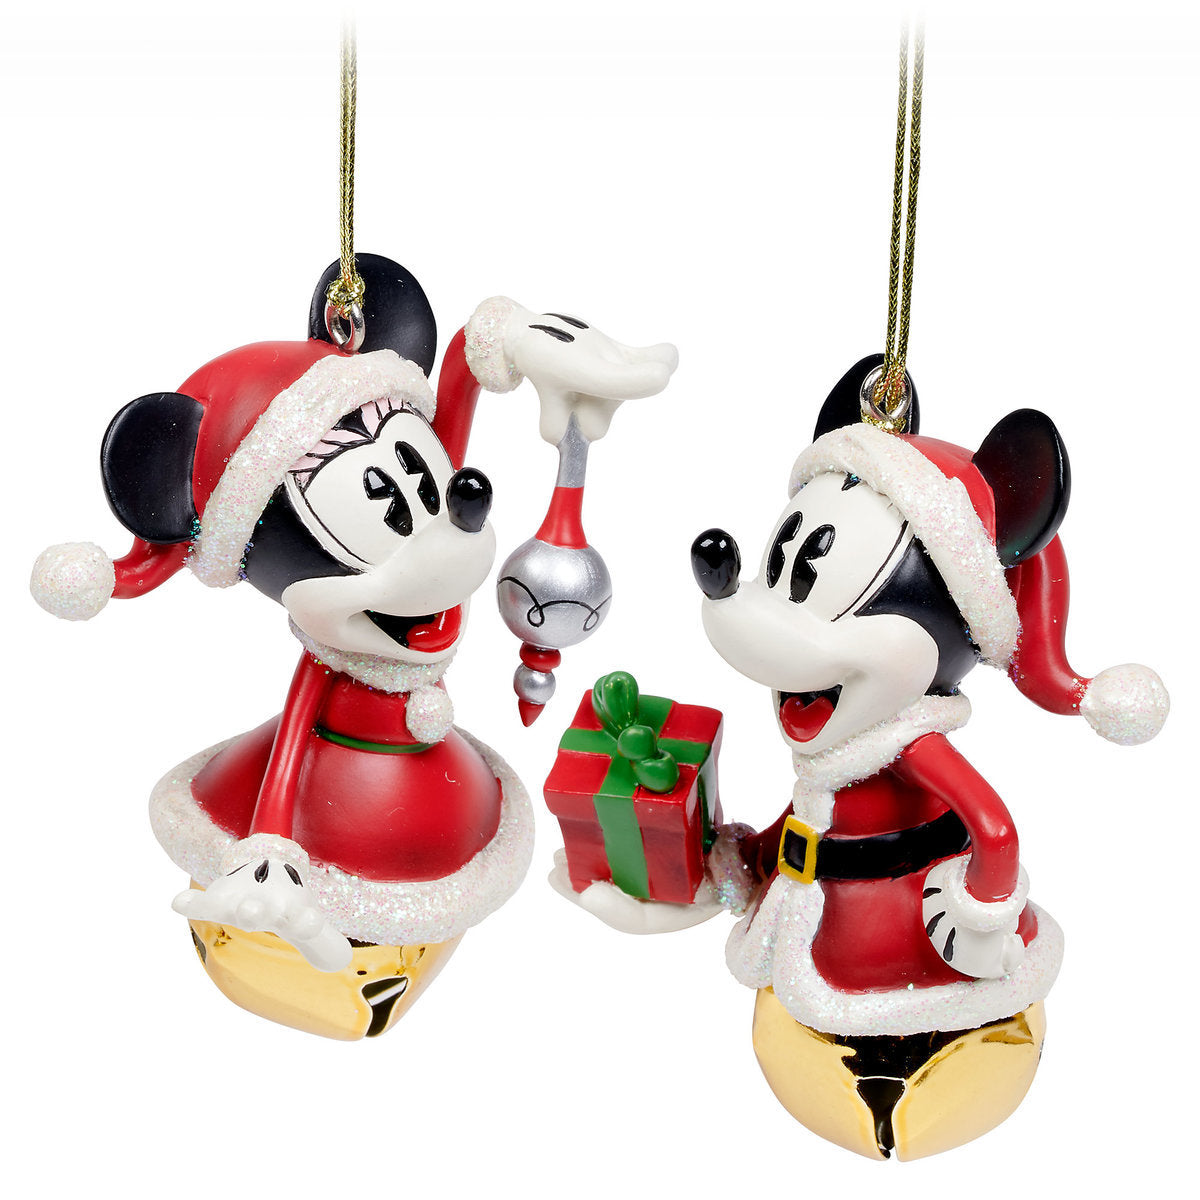 Disney Parks Turn the Century Holiday Mickey Minnie Santa Bell Ornament Set New